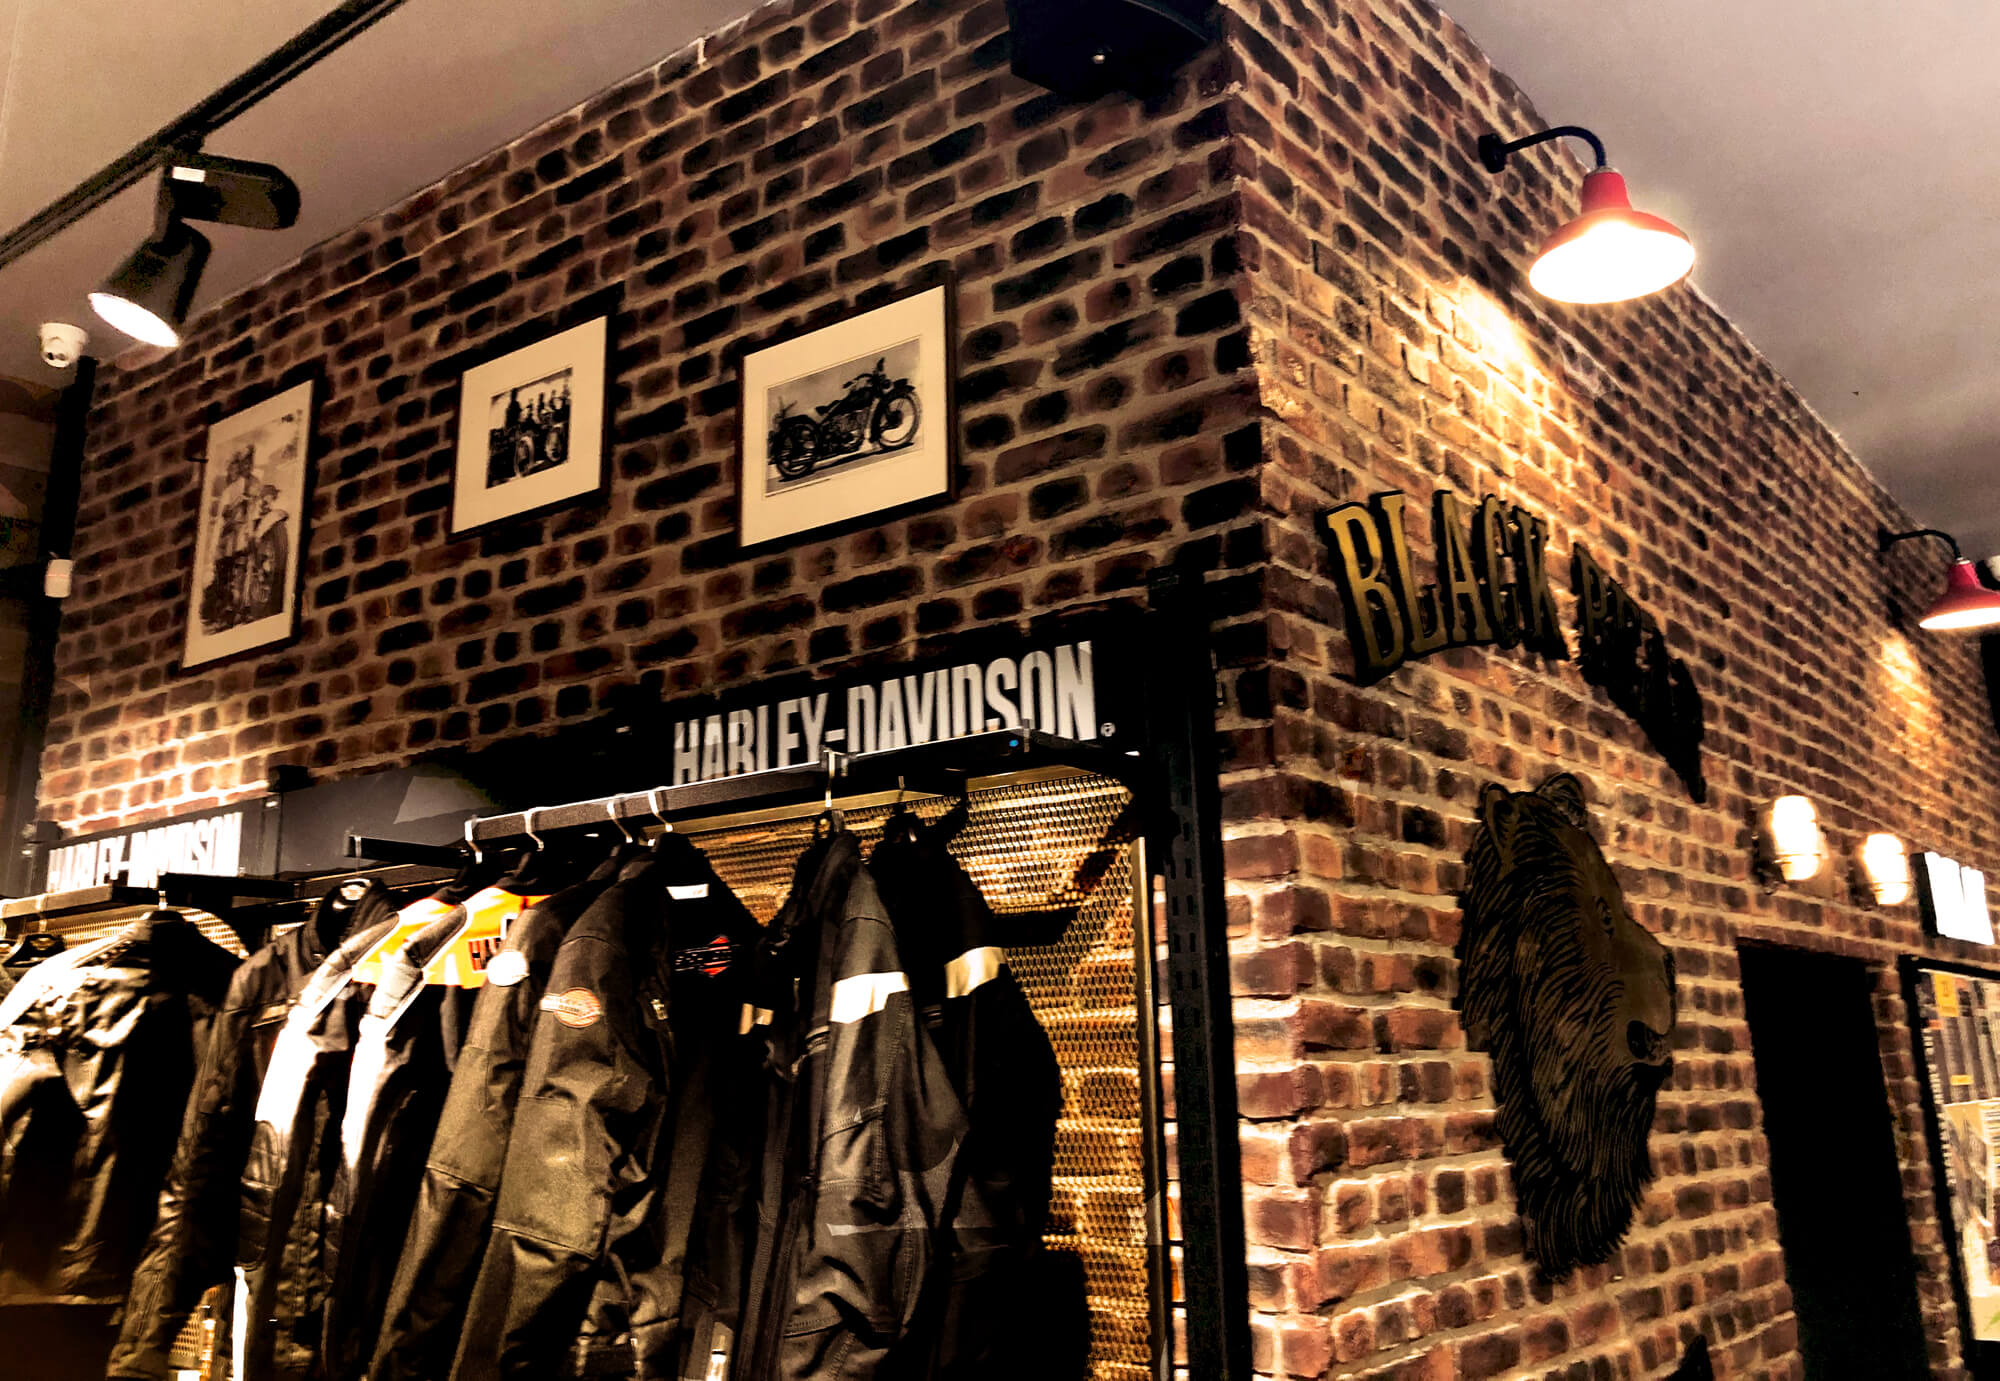 New showroom for Harley Davidson